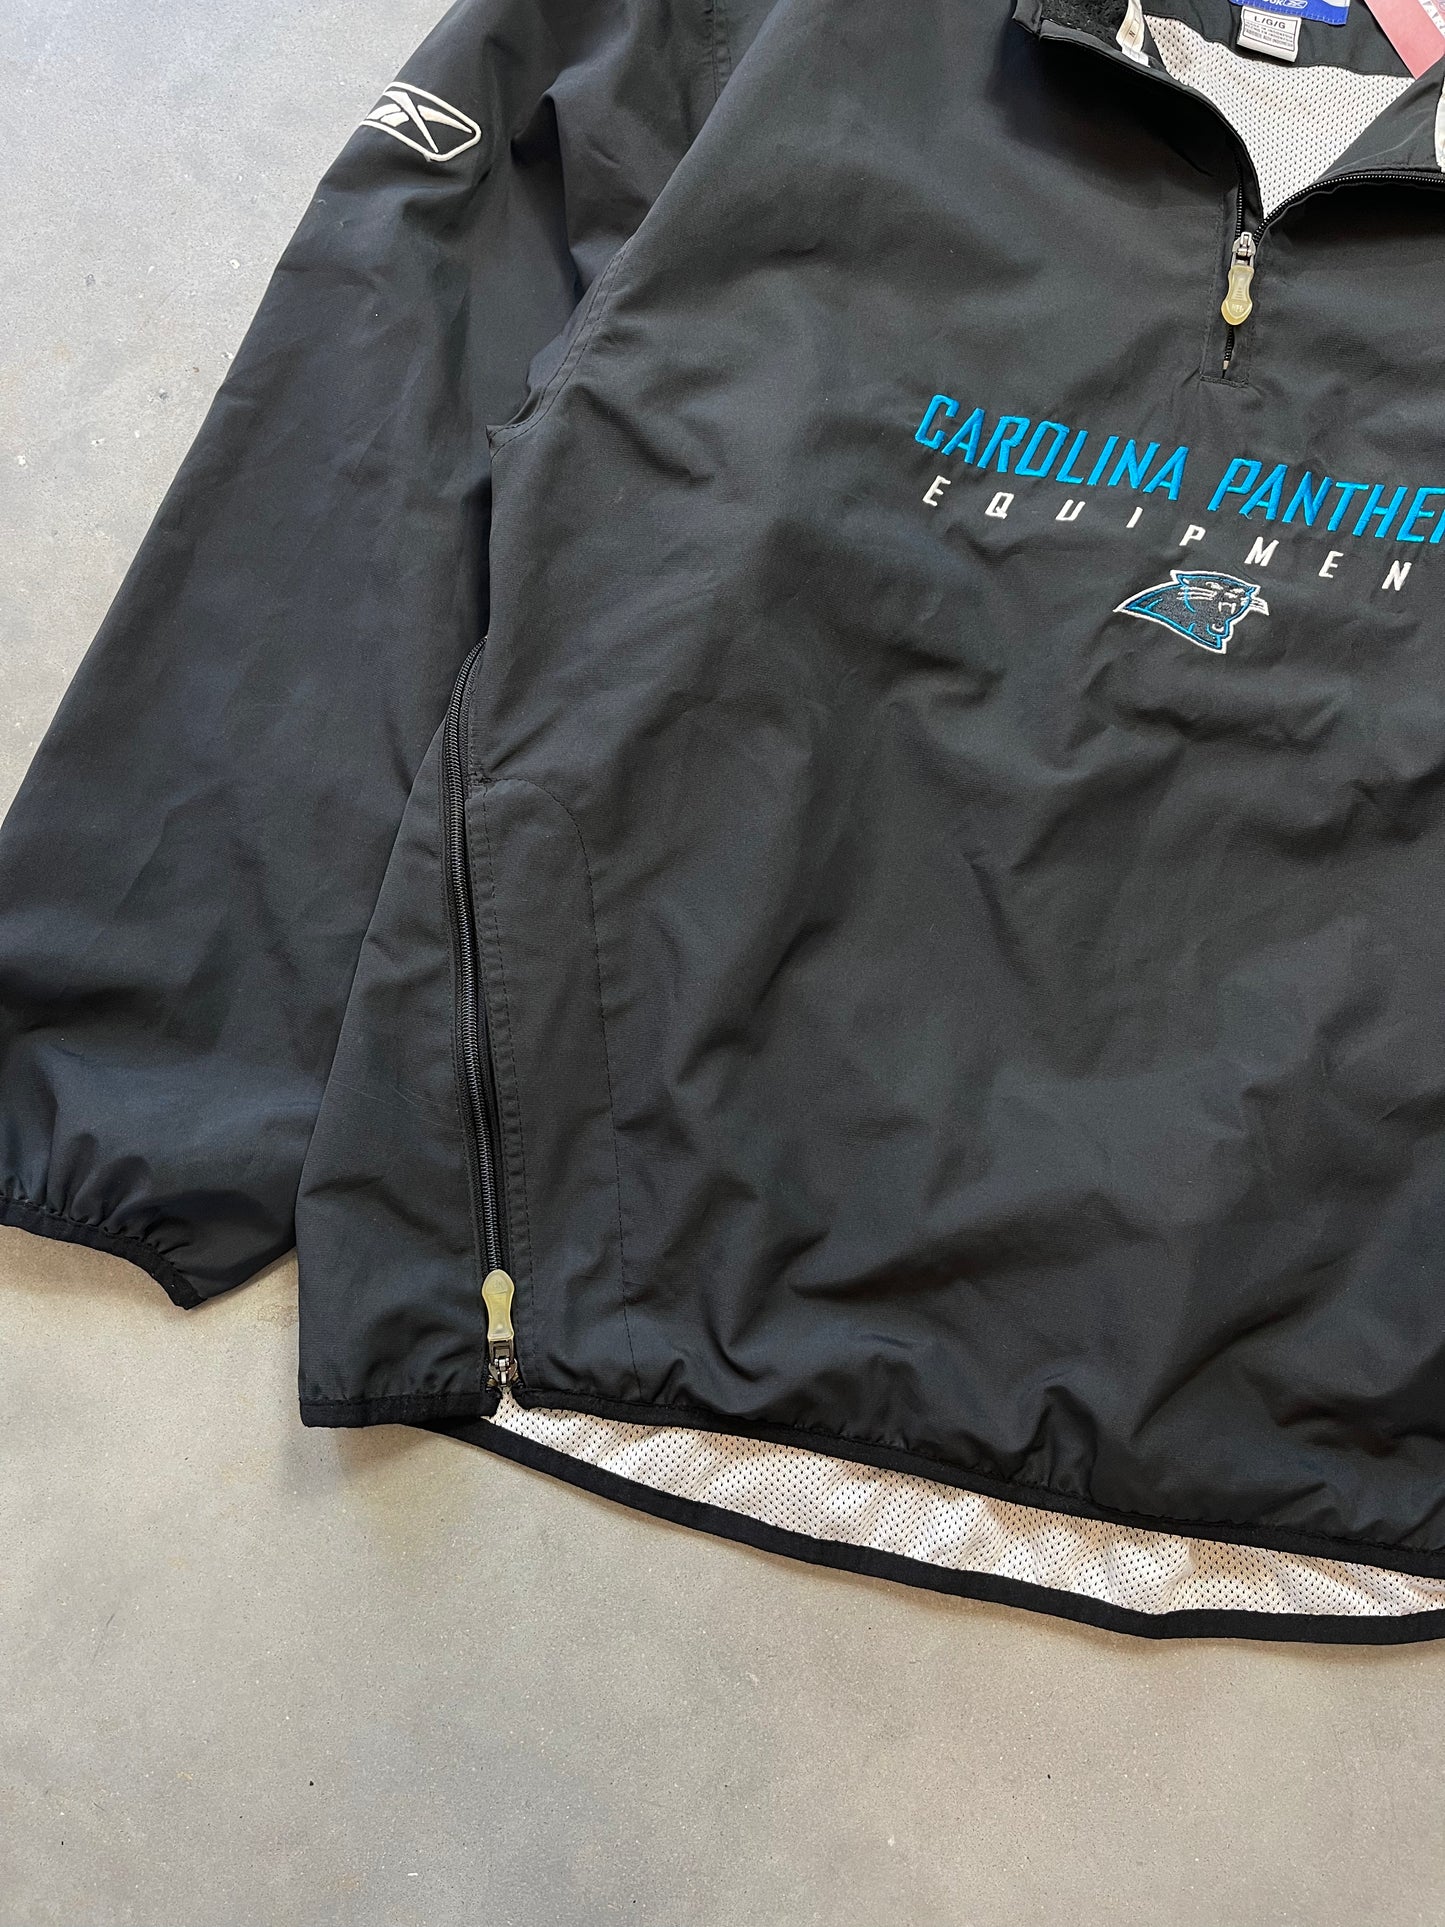 00's Carolina Panthers Reebok Half Zip Equipment NFL Pullover Jacket (Large)